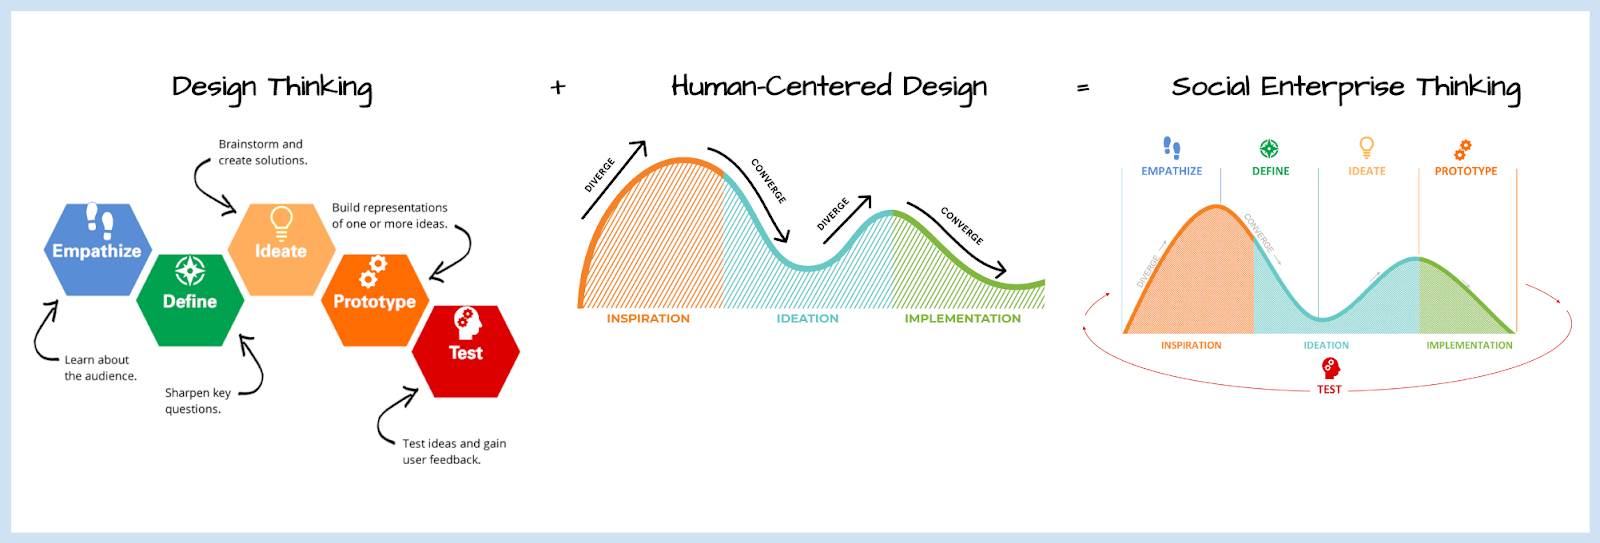 design thinking vs hcd